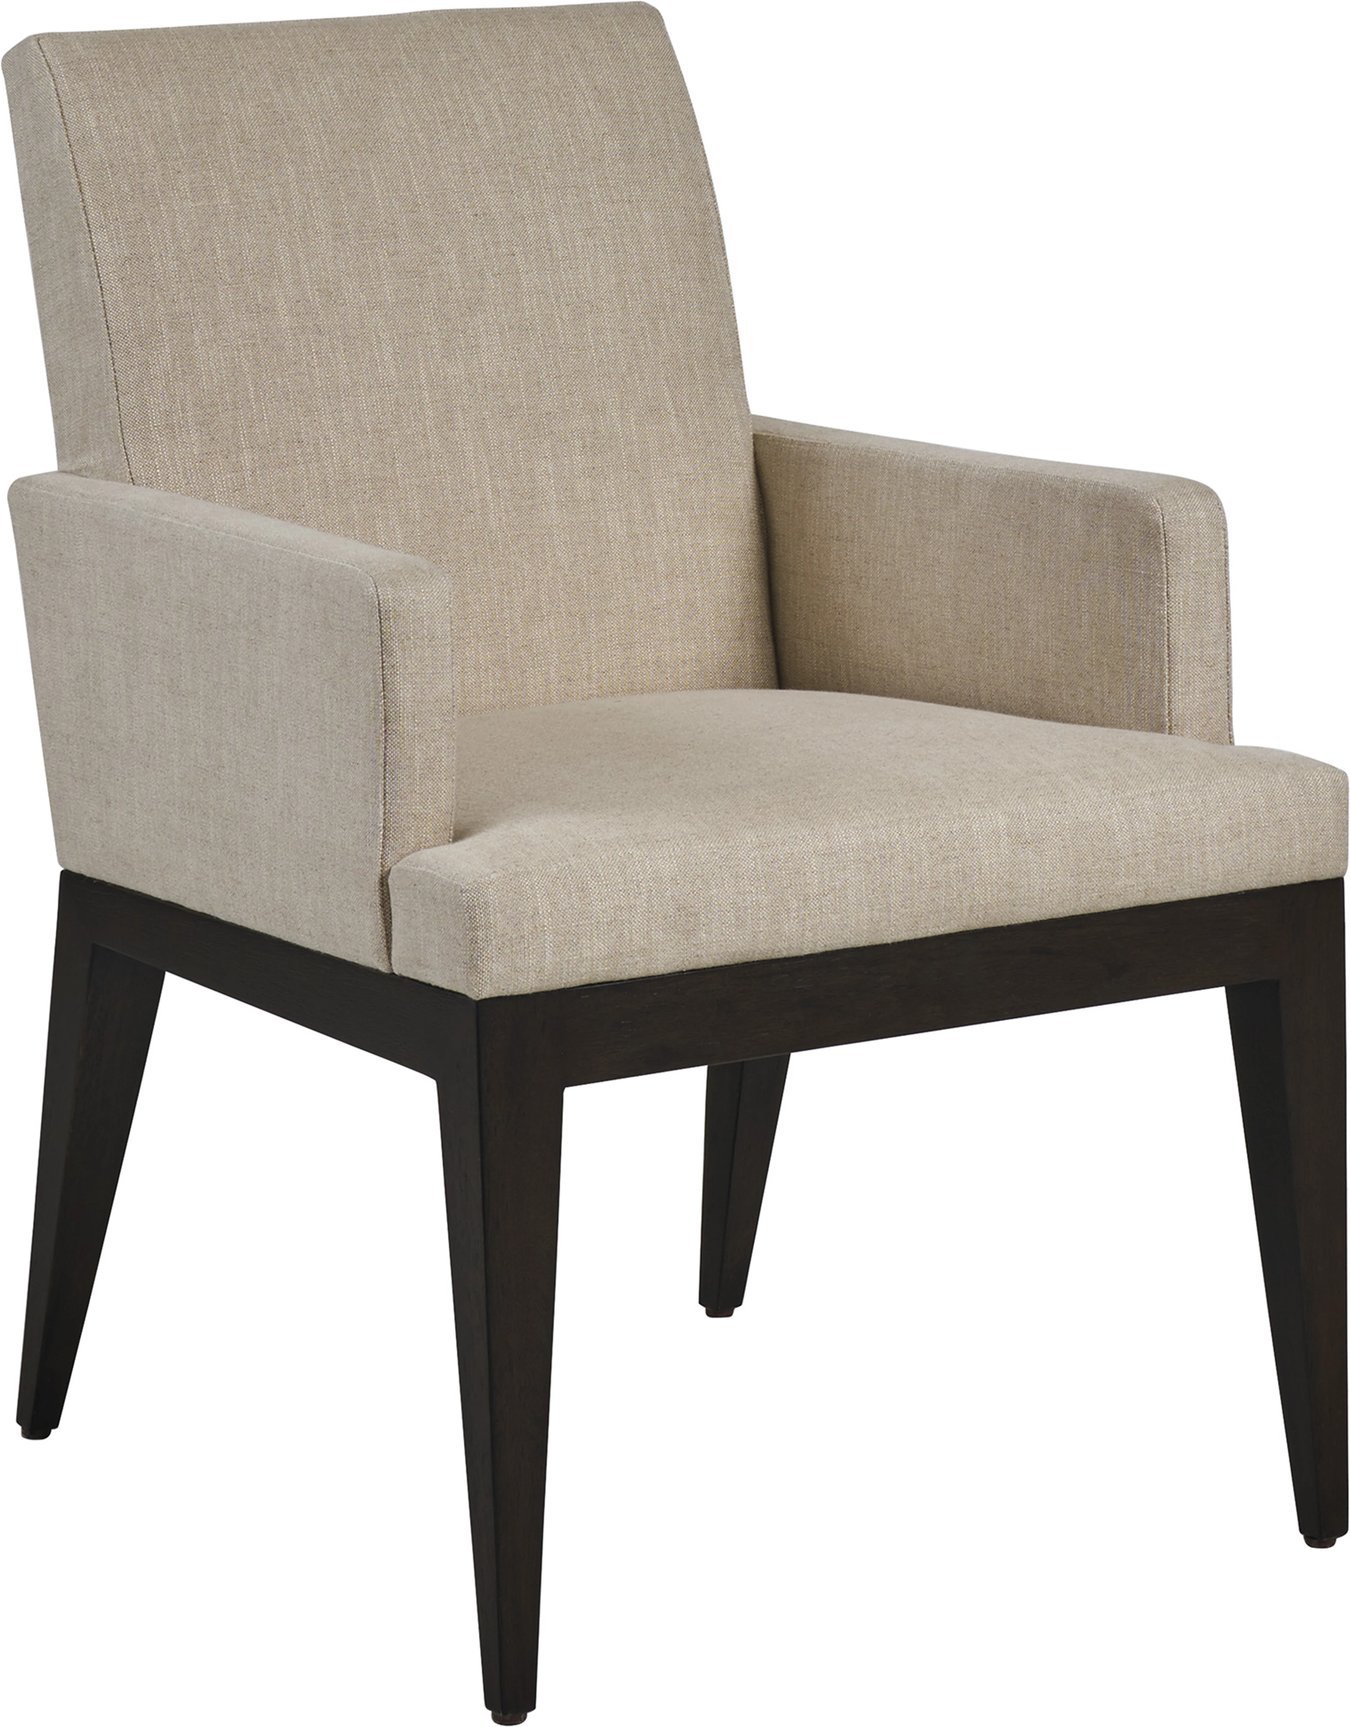 Lexington Murano Upholstered Arm Chair | Layla Grayce